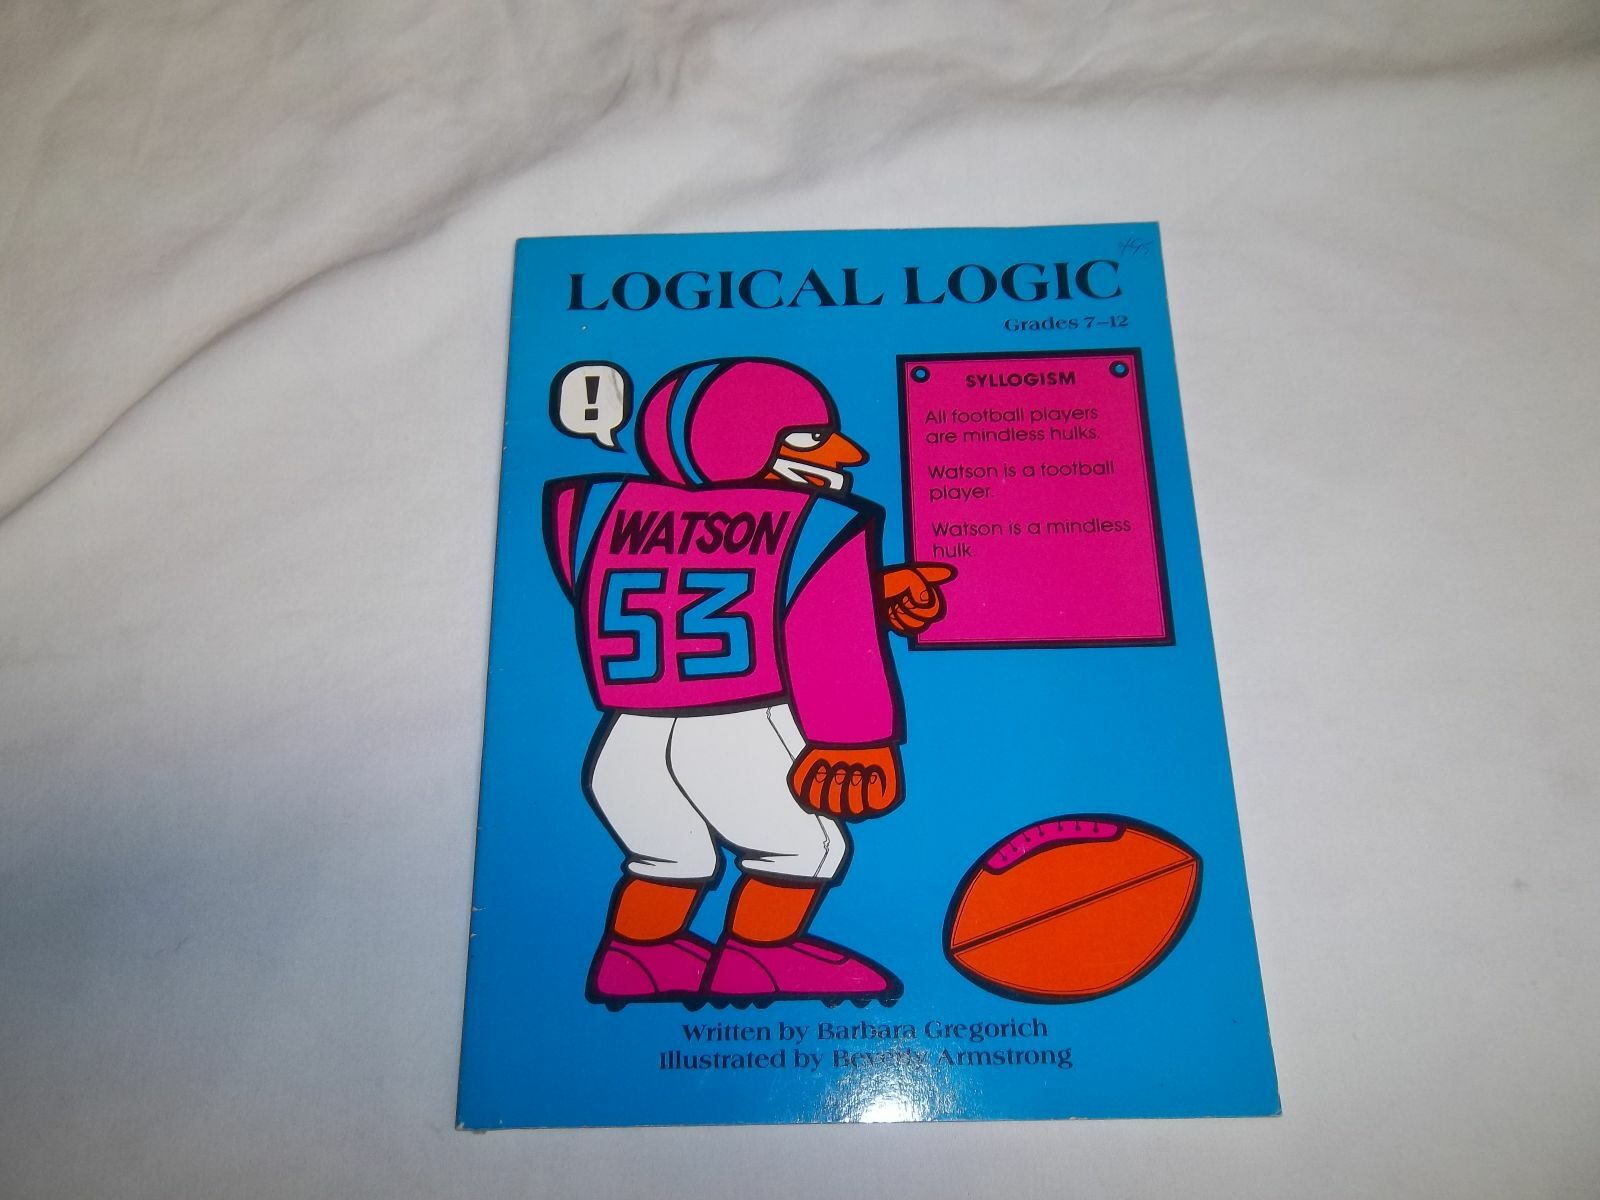 LW1003 LOGICAL LOGIC REPRODUCIBLE PAPER BACK ACTIVITY BOOK  GRADES 7-12